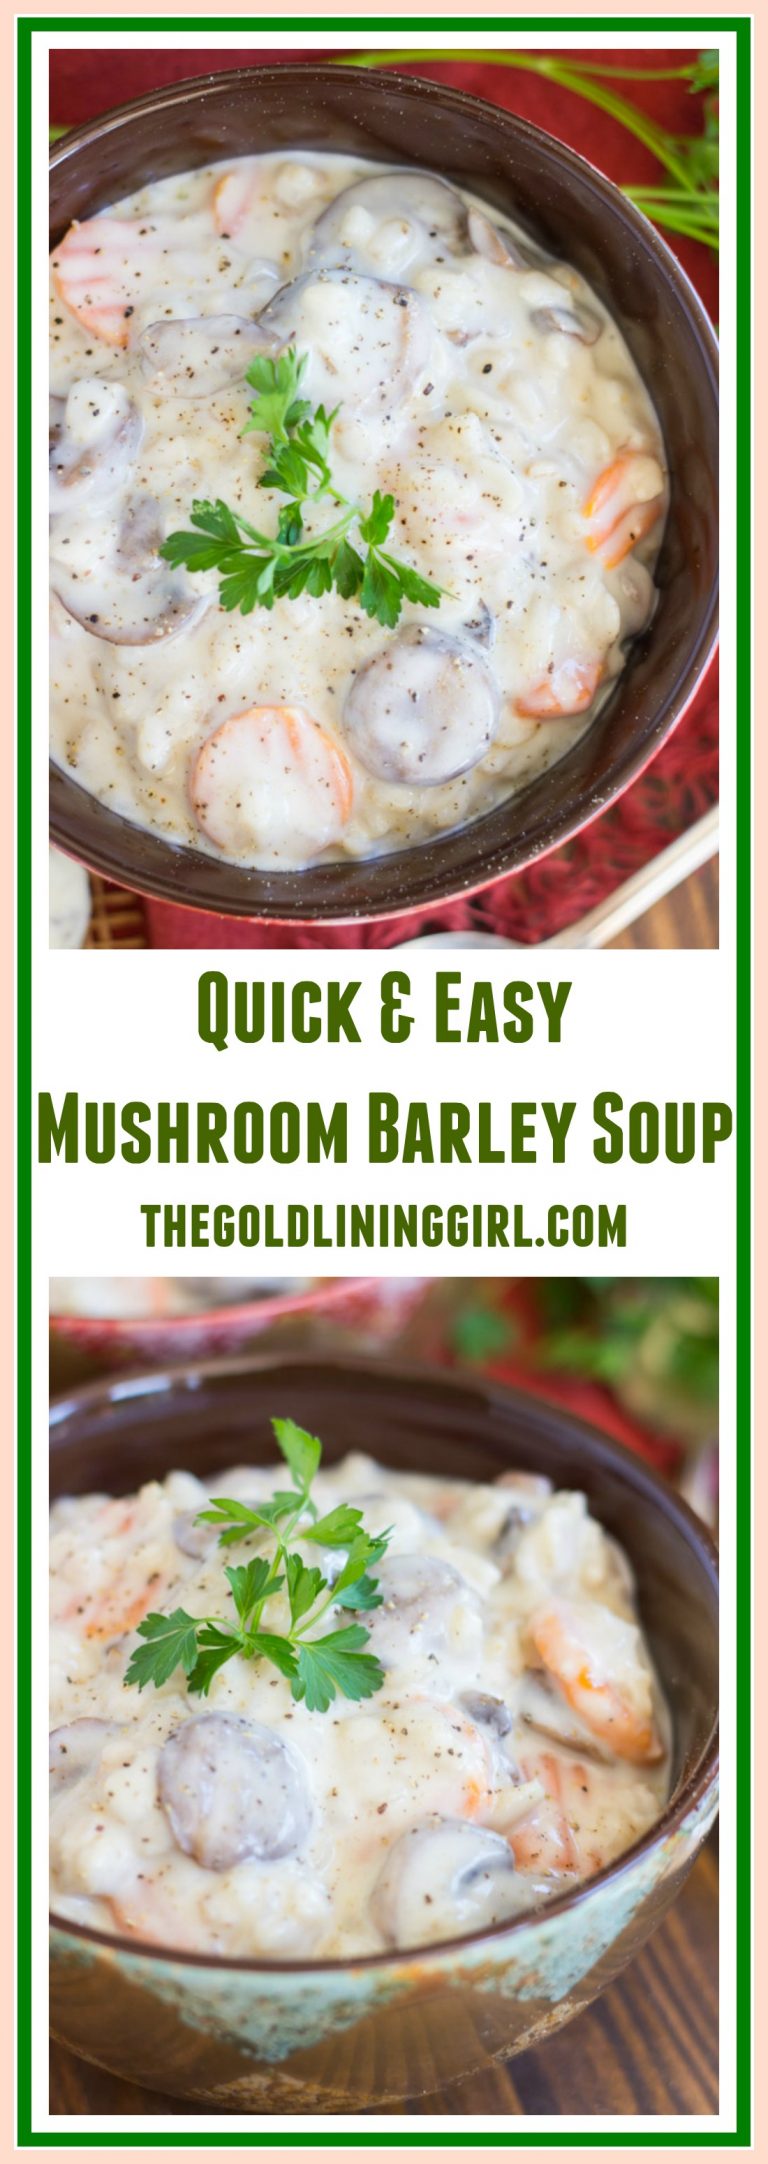 Quick & Easy Mushroom Barley Soup